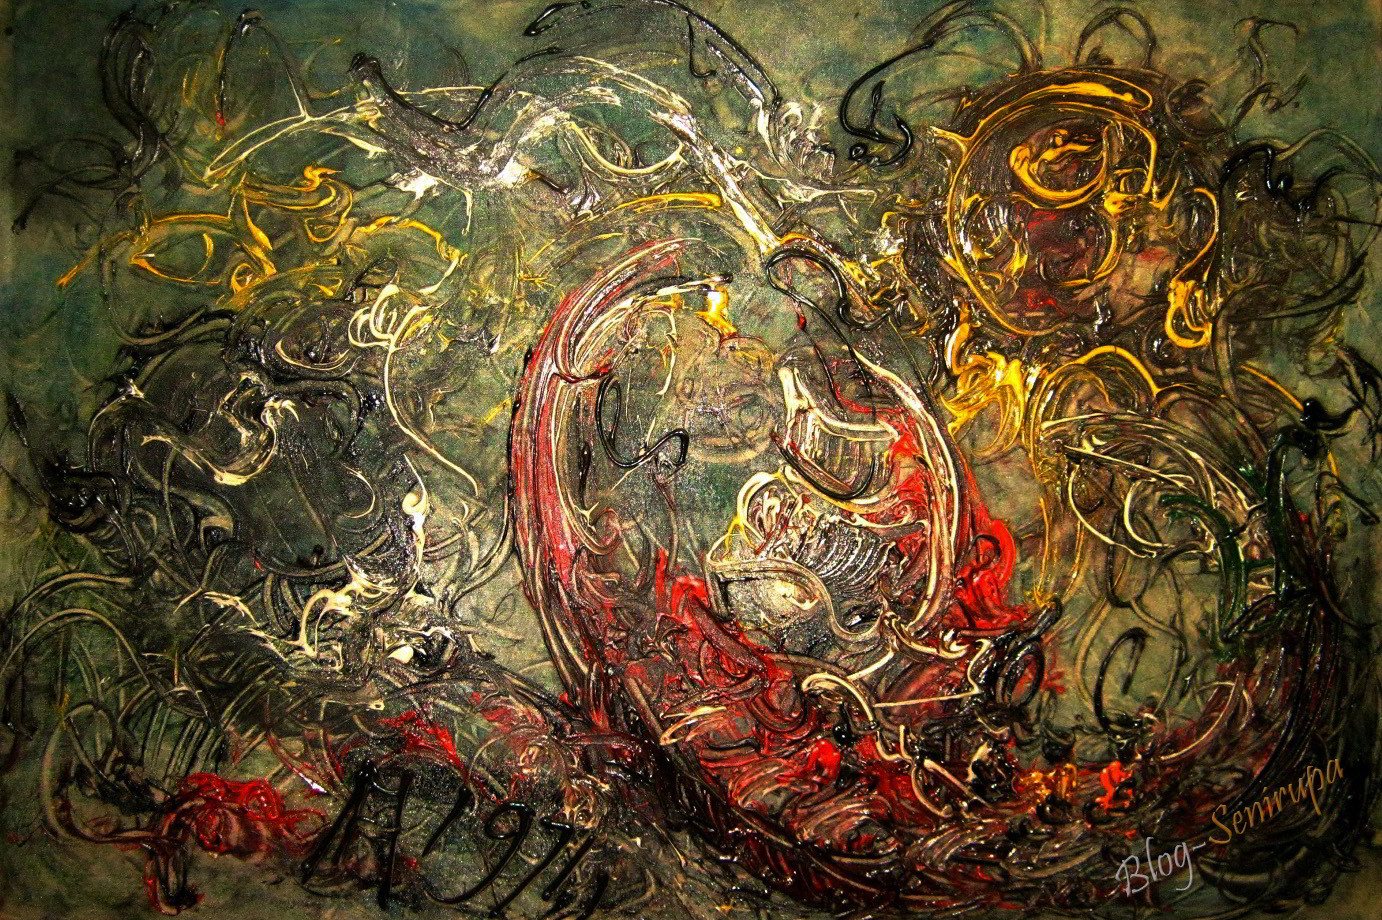 Lukisan Badai Pasti Berlalu karya Affandi menjadi salah satu lukisan terkenal dunia asal Indonesia